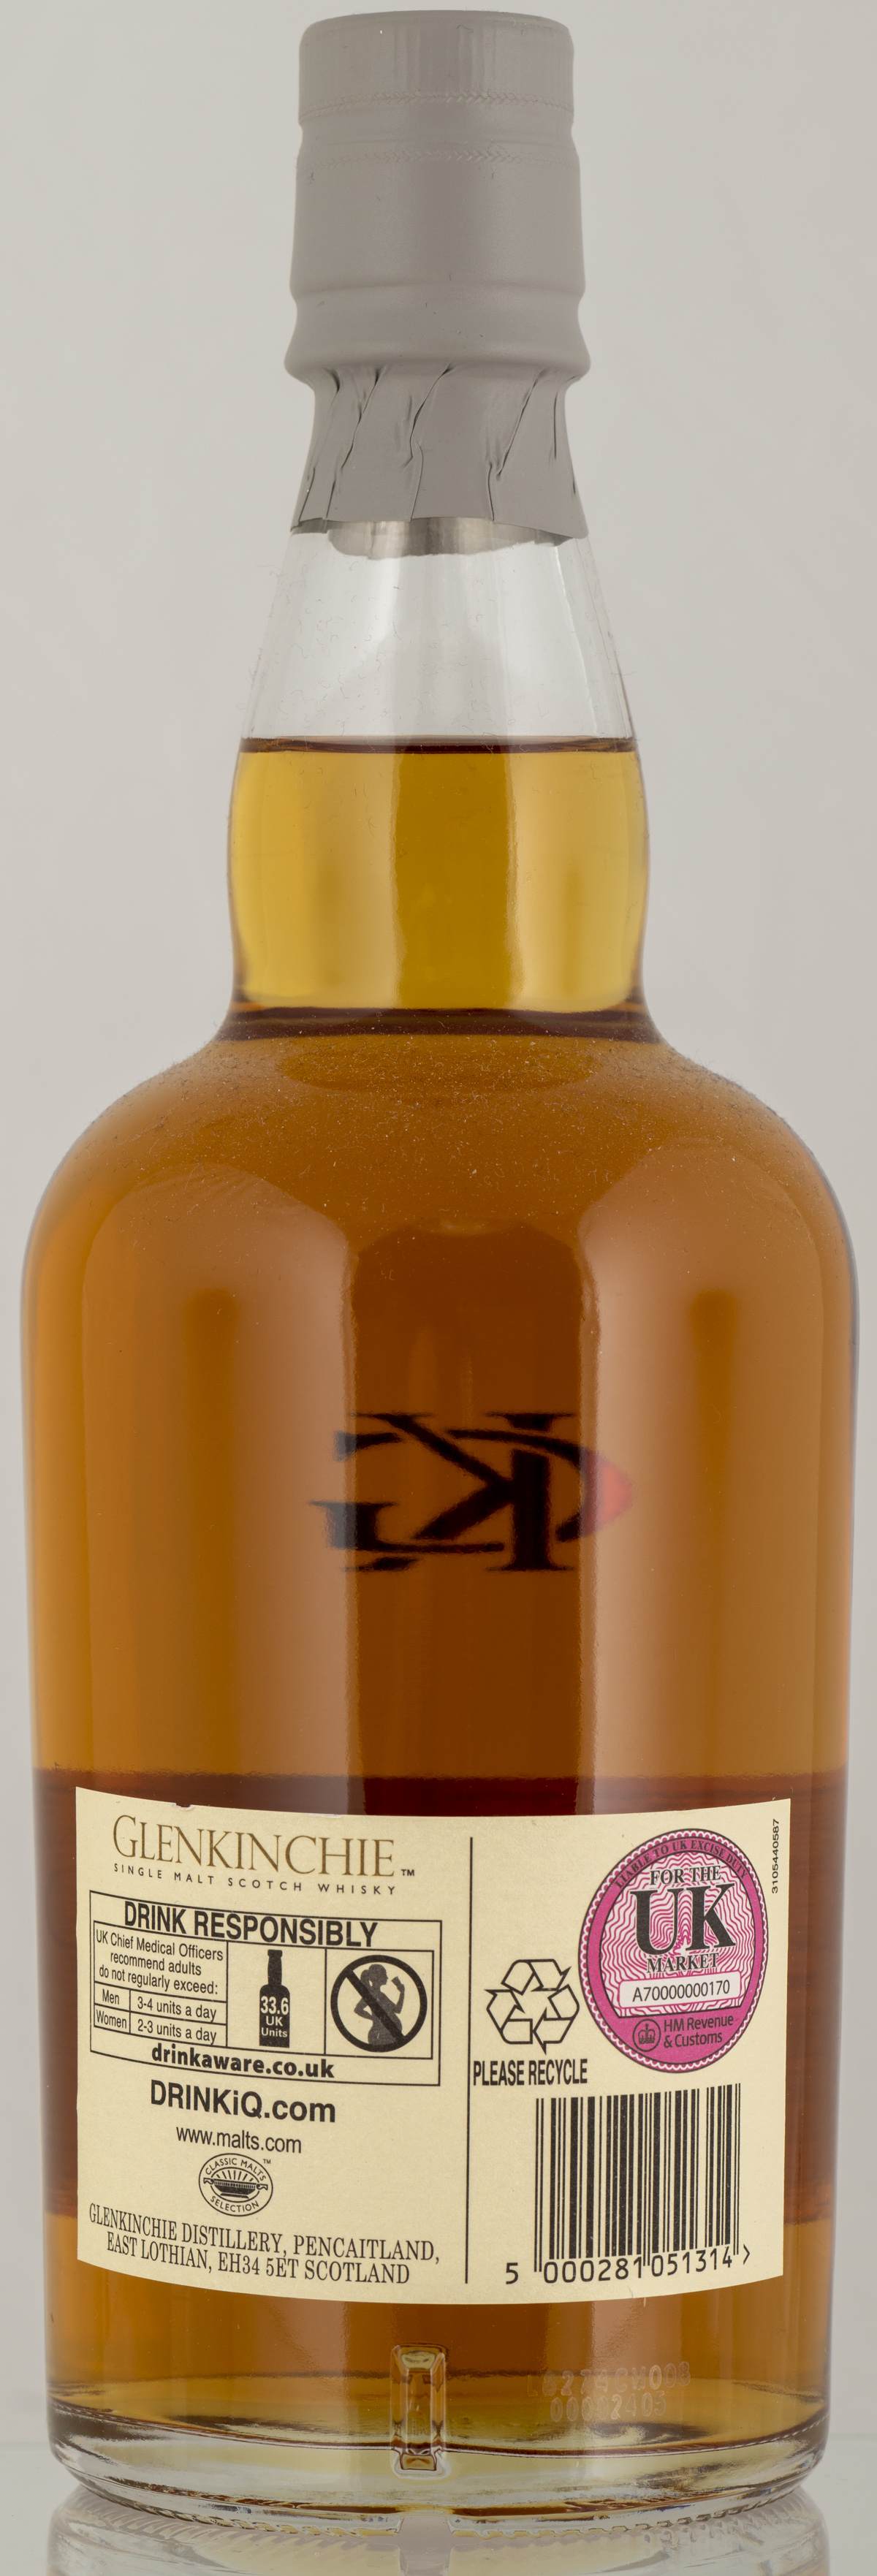 Billede: PHC_2614 - Glenkinchie Distillery Exclusice Bottling Batch 01 - bottle back.jpg